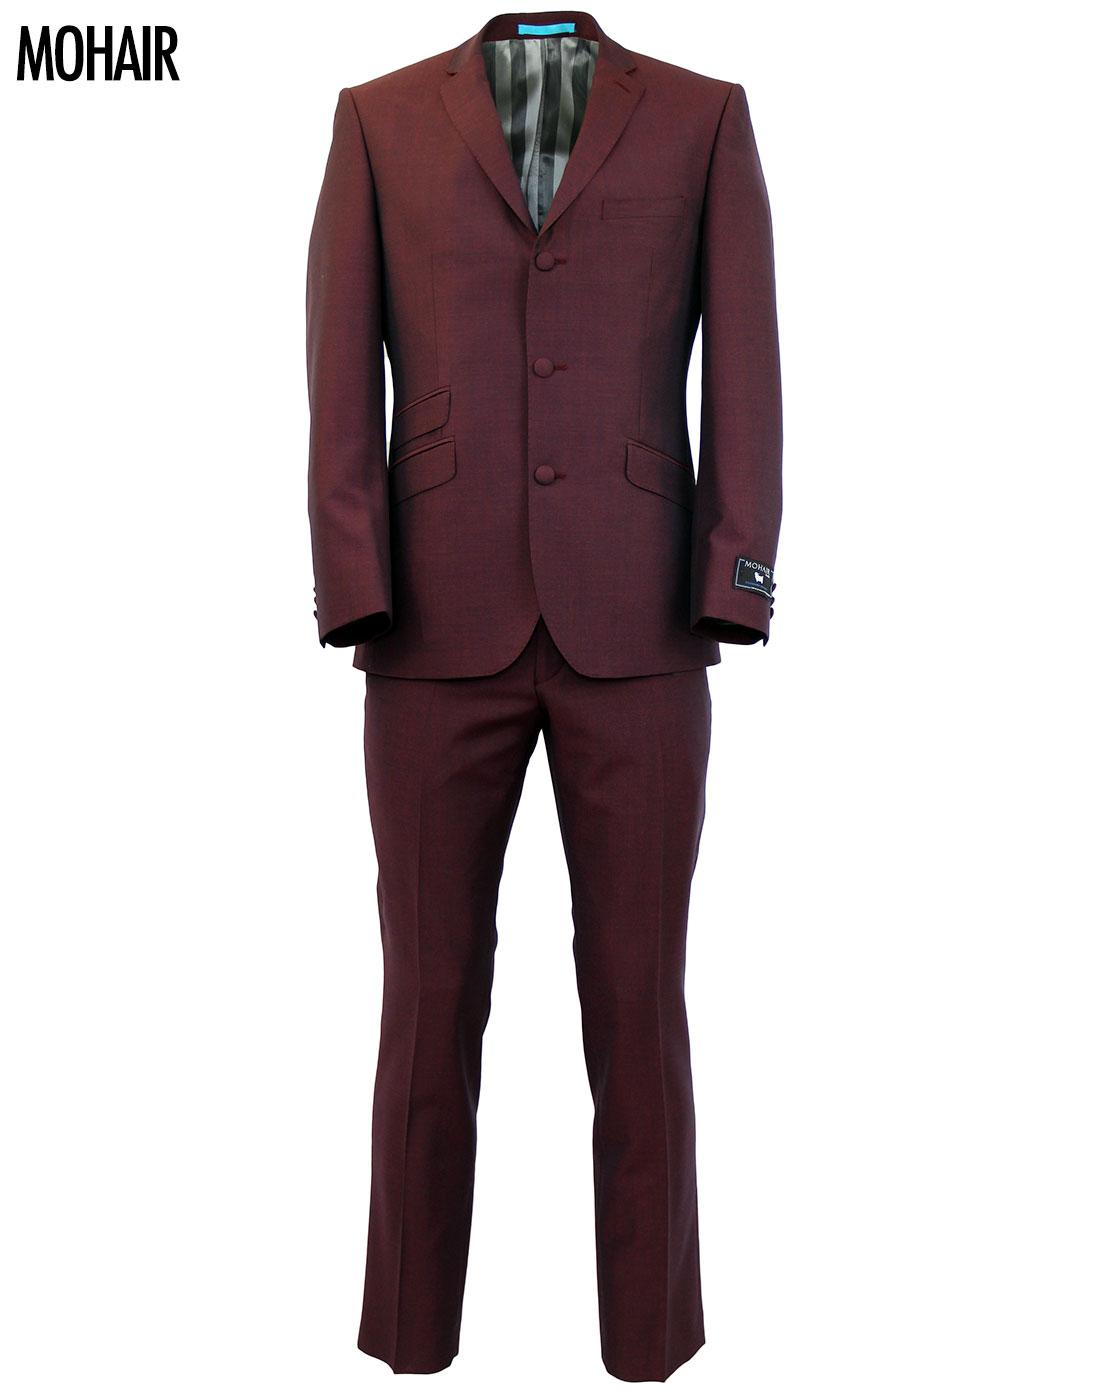 Retro 60s Mod Mohair Blend 3 Button Suit in Berry